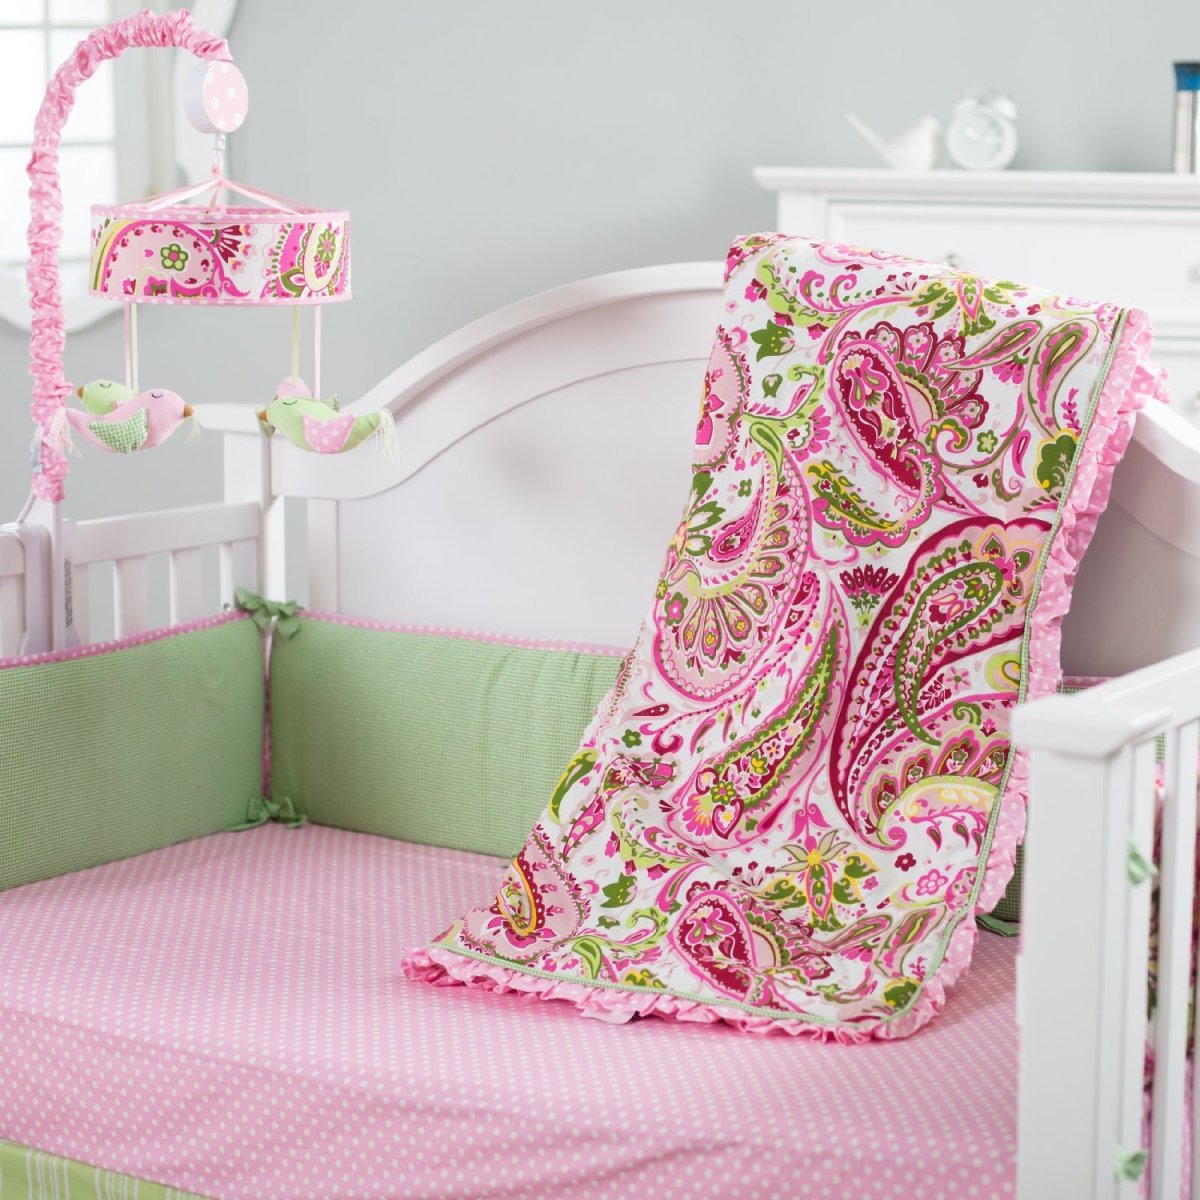 3-and-4-piece-mini-crib-bedding-sets-for-girls-nursery-room